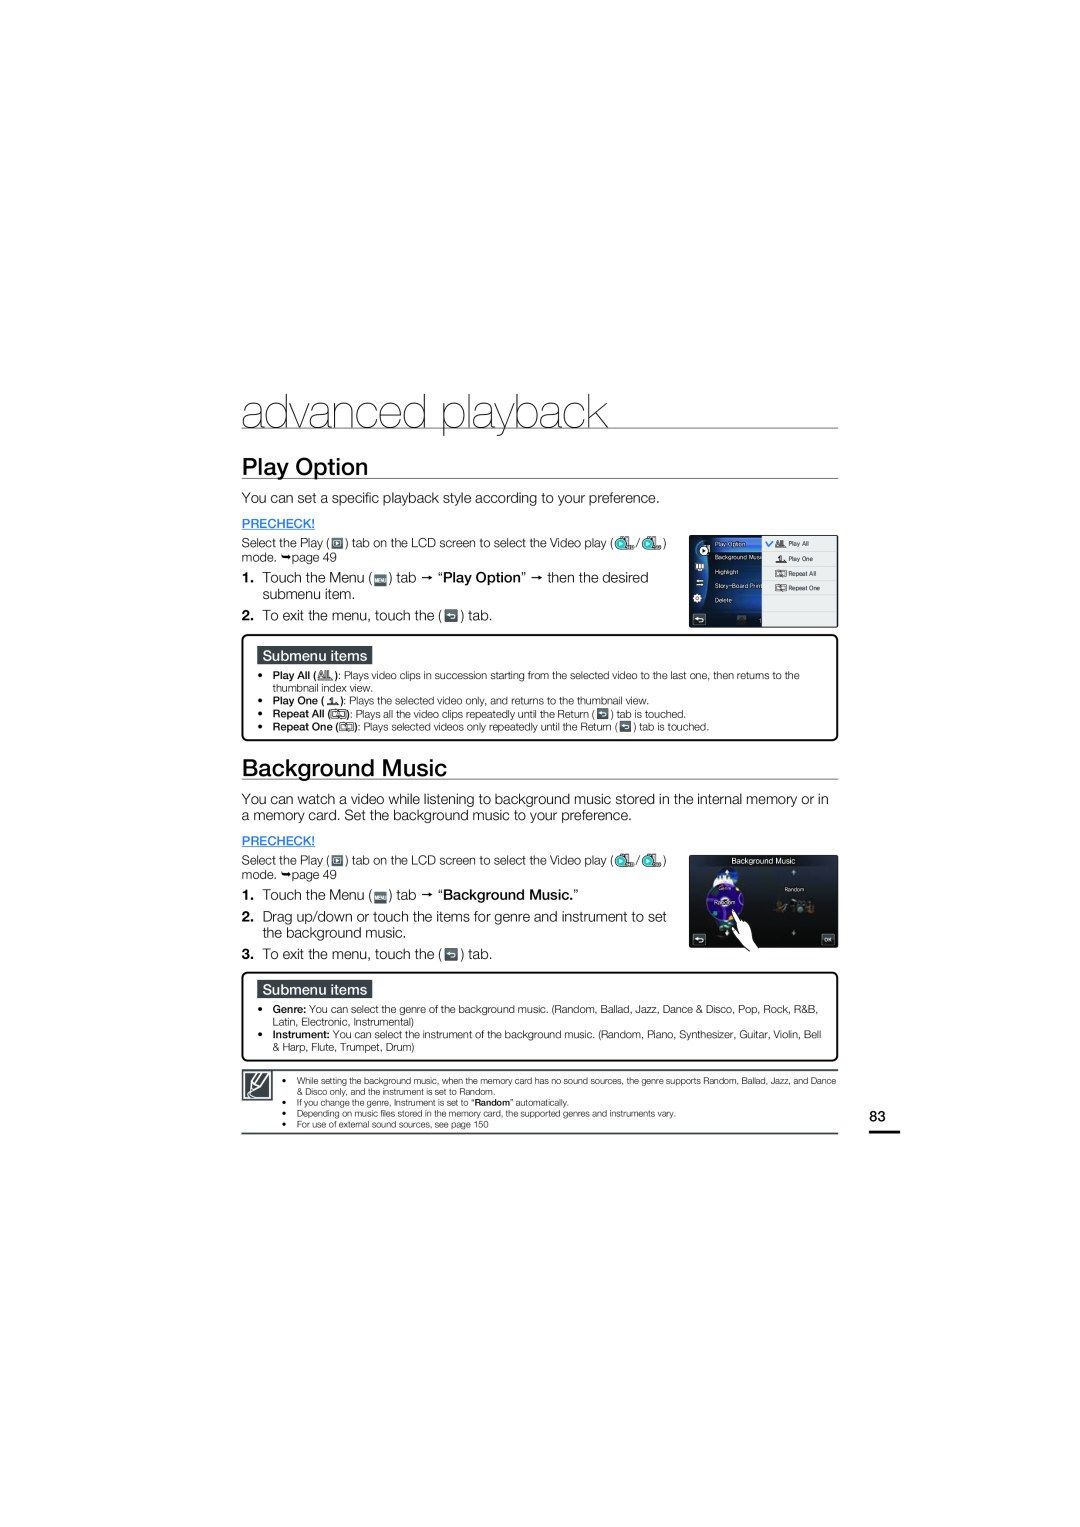 Samsung HMX-S10BN/XAA, HMX-S15BN/XAA manual advanced playback, Play Option, Background Music, Submenu items, Precheck 